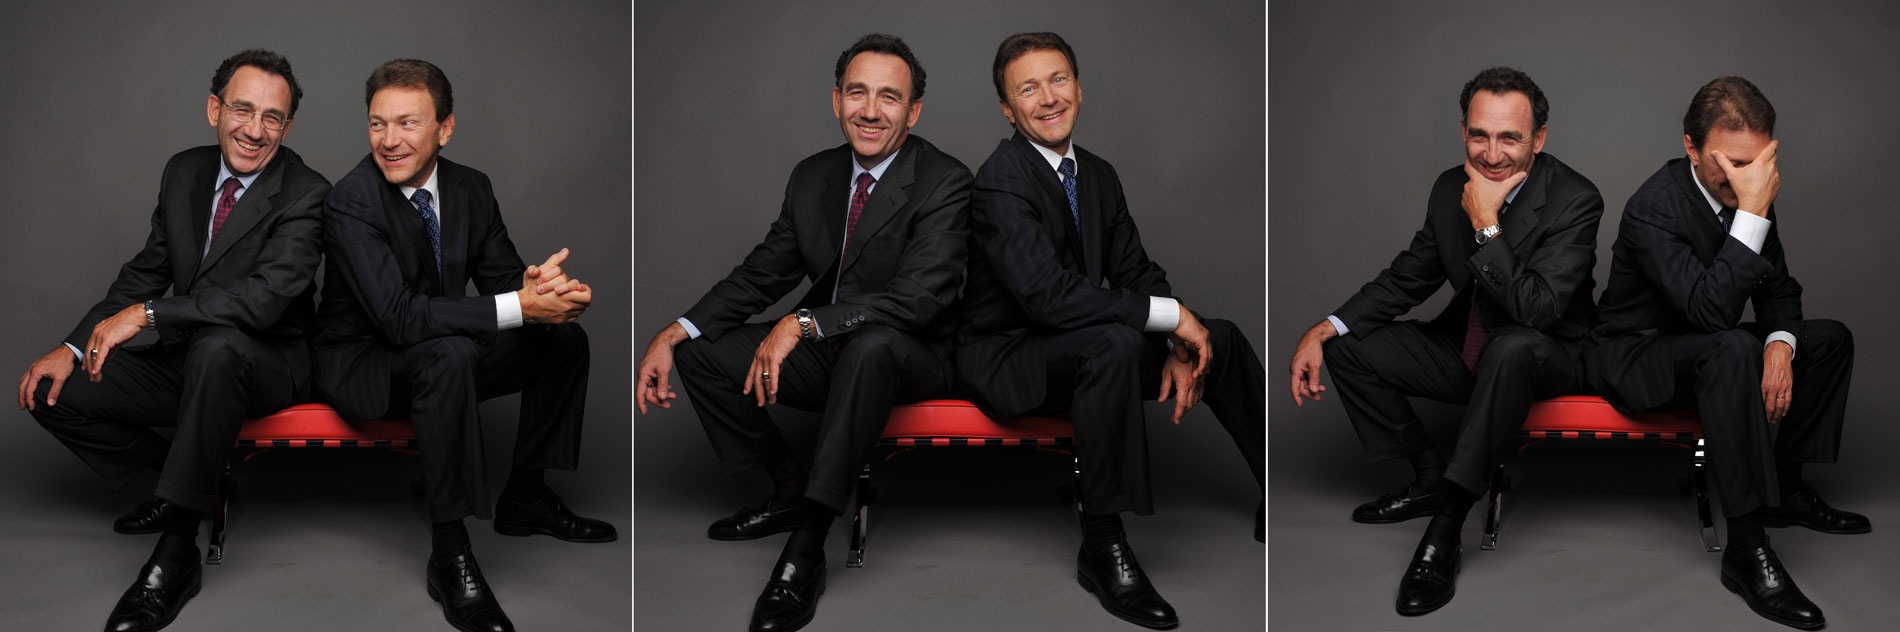 Gilles Gobin & Jacques Riou, Rubis, 2009